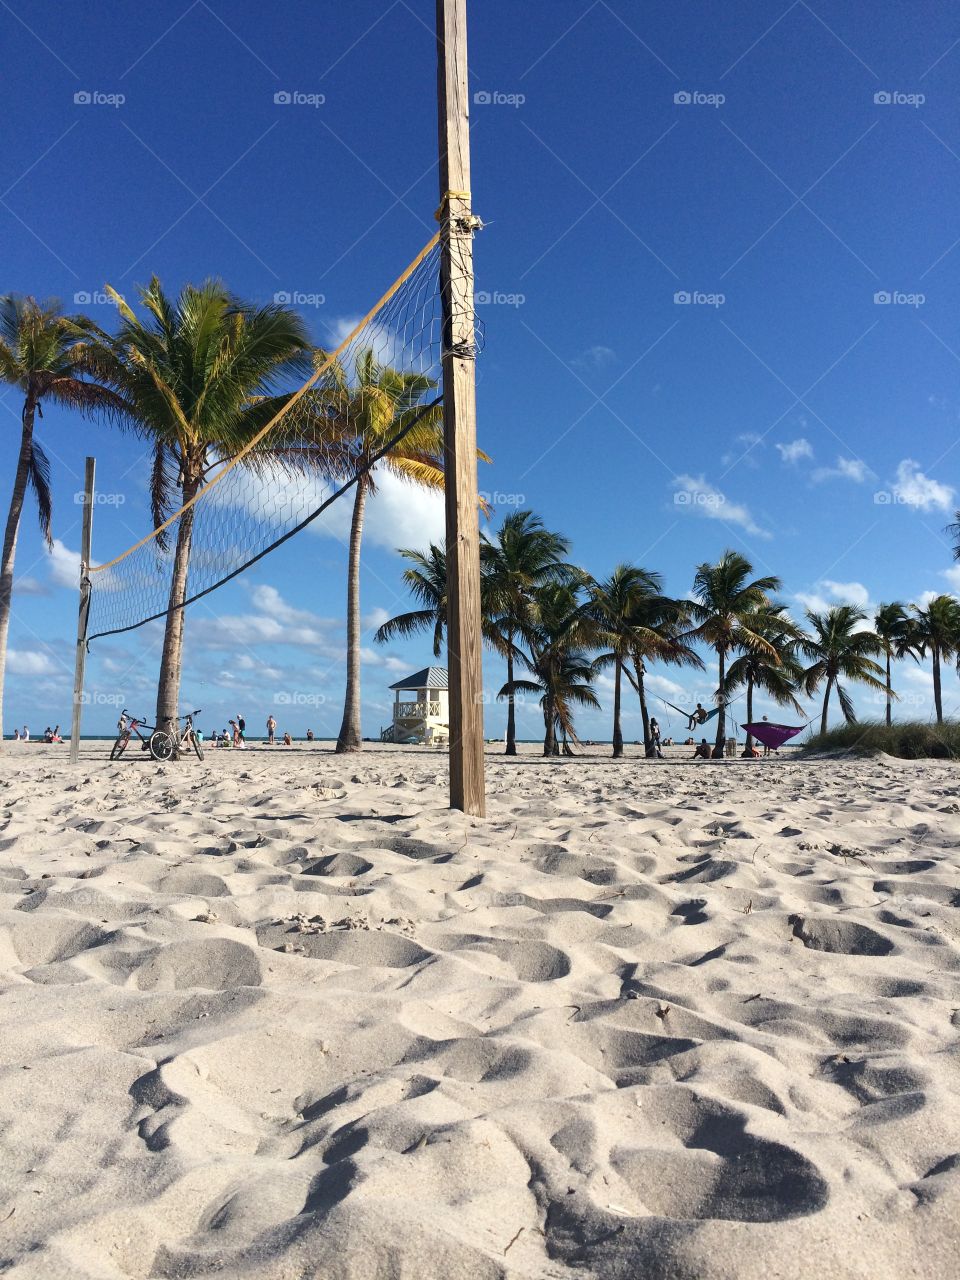 Sandy beach volleyball